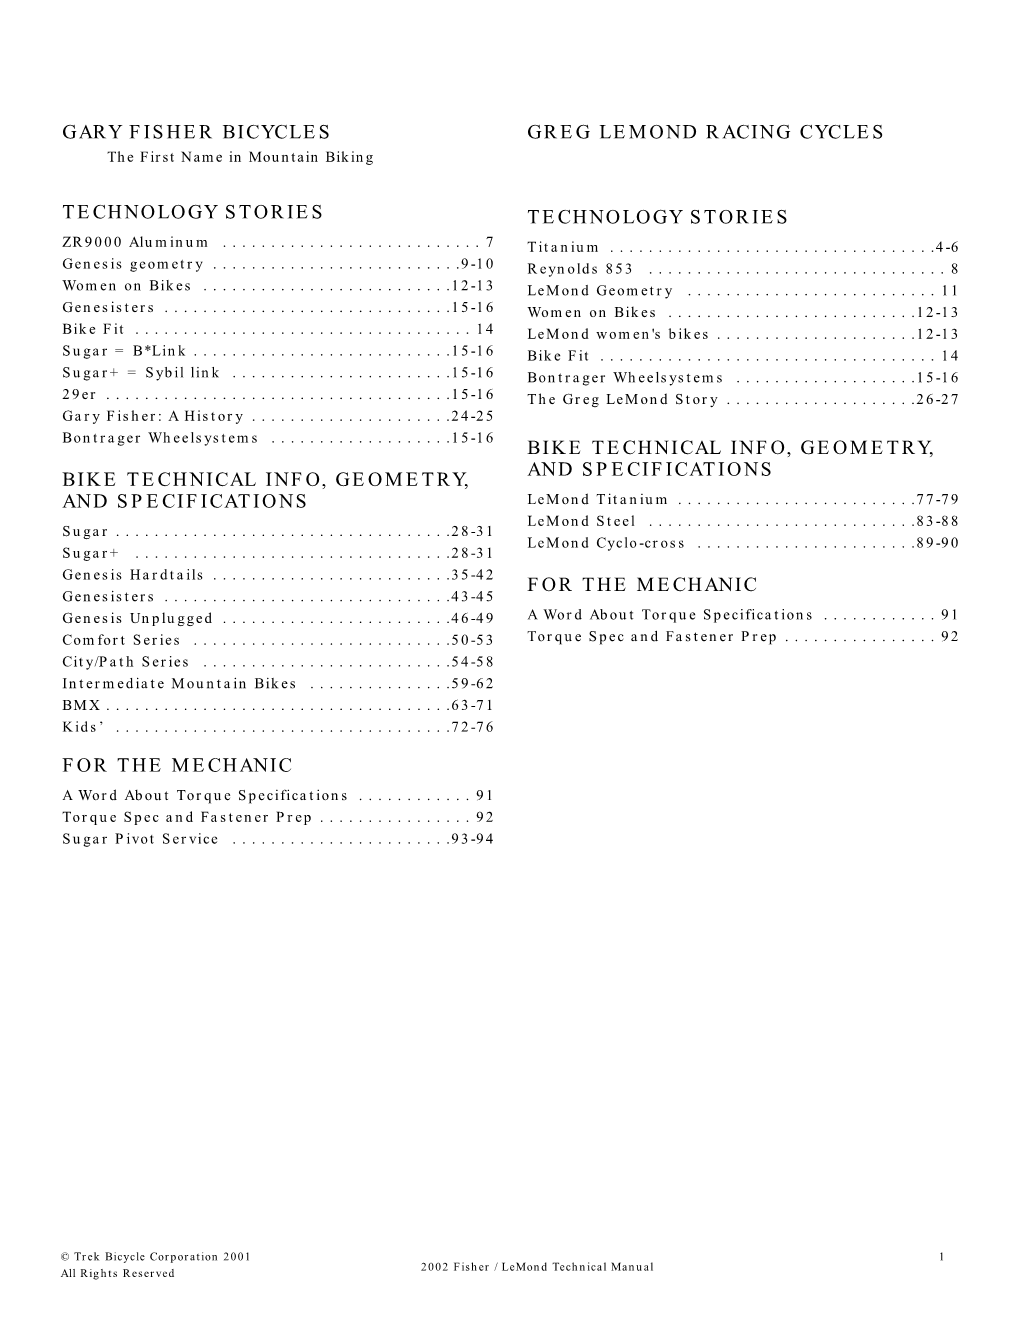 2002 Lemond Technical Manual